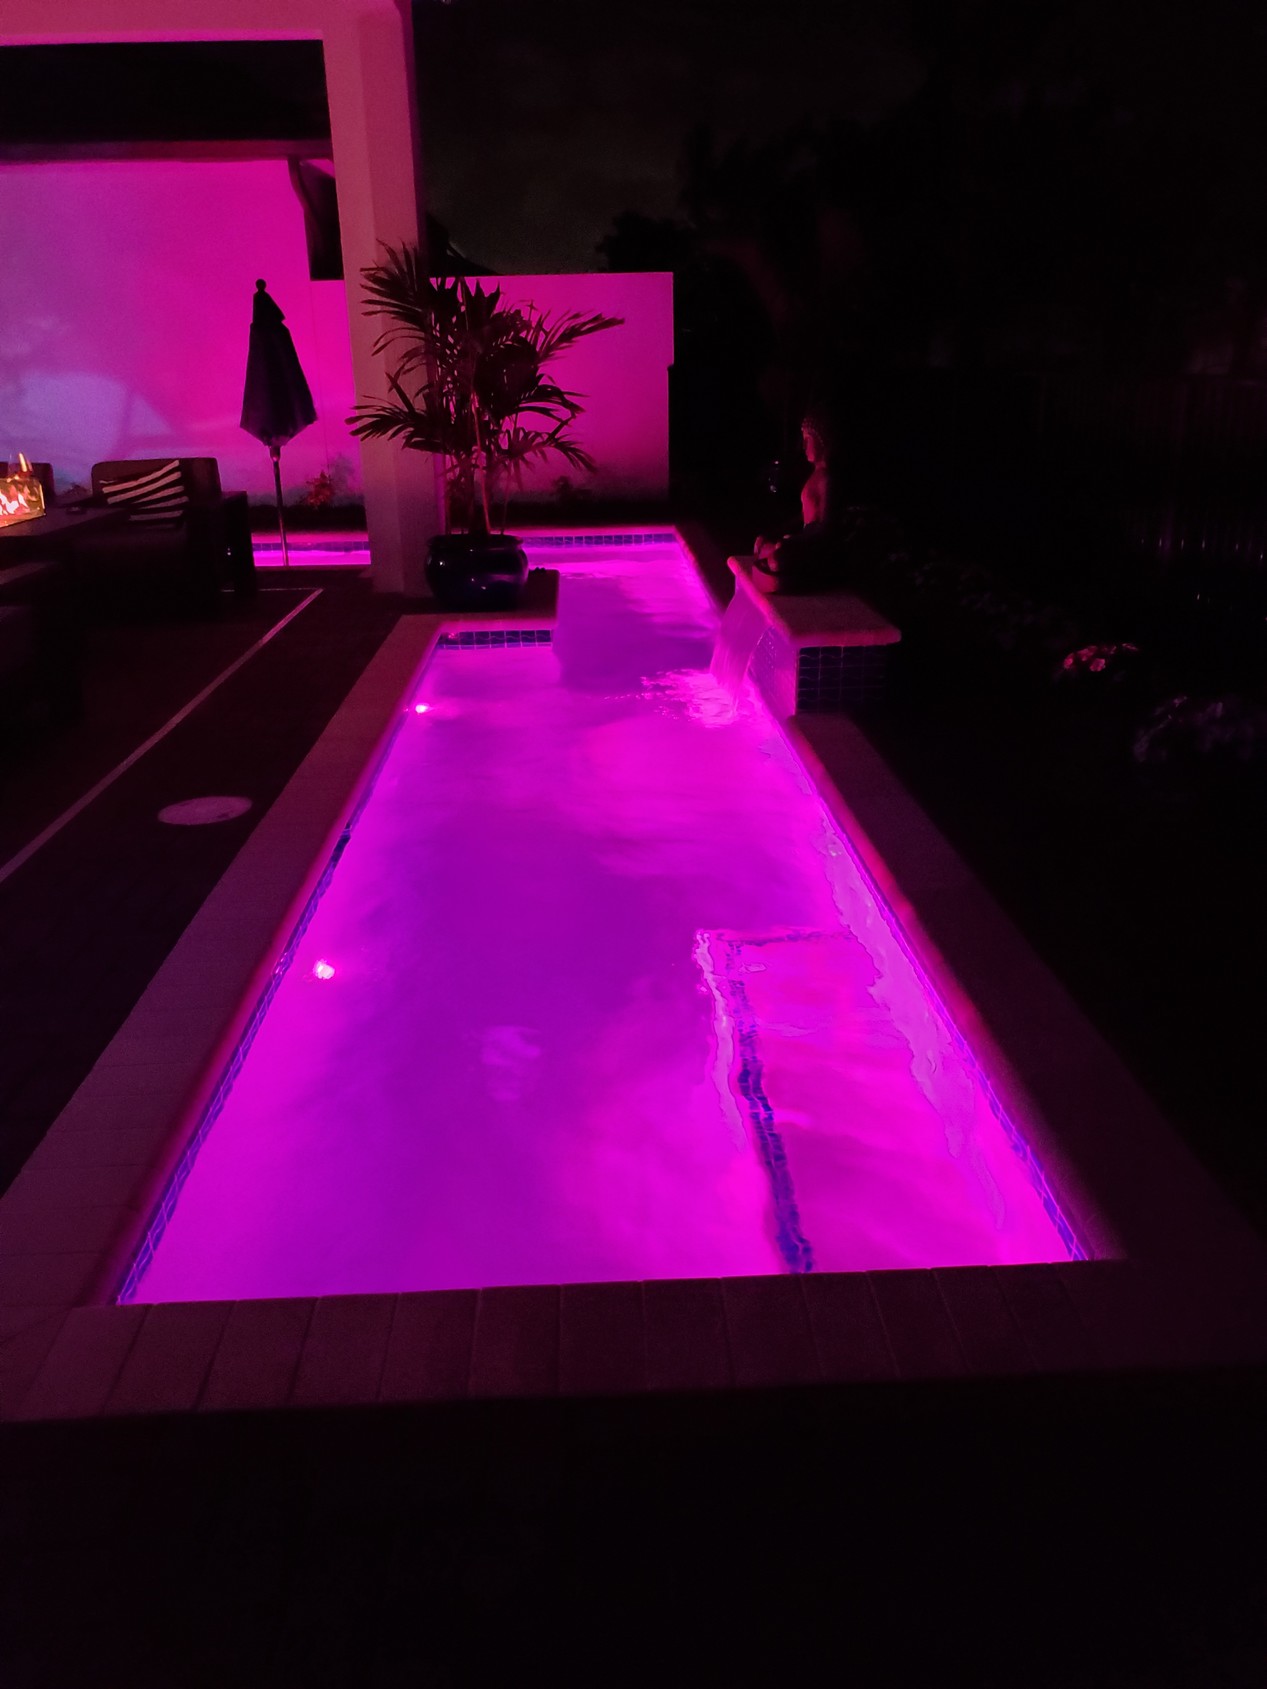 Pool Lighting